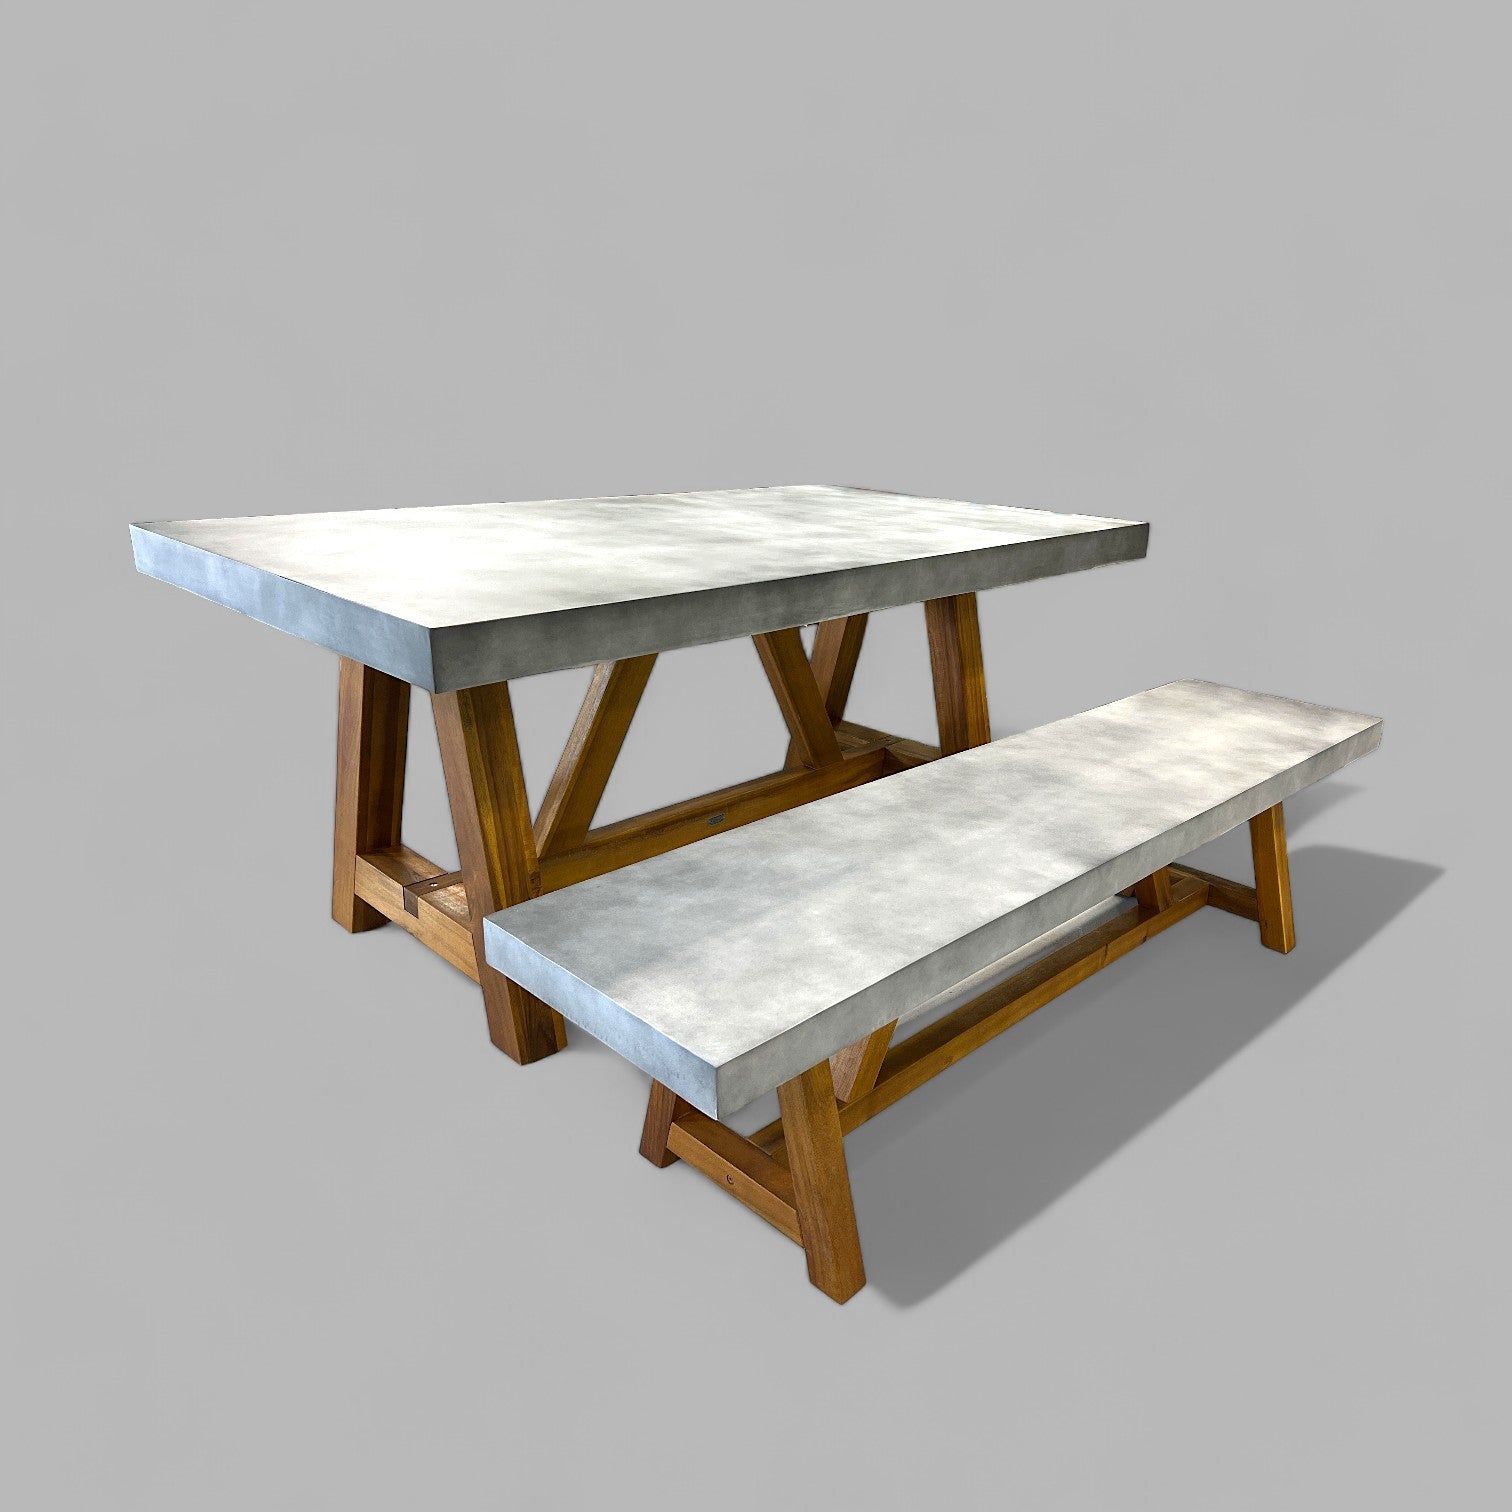 Concrete Table & Bench